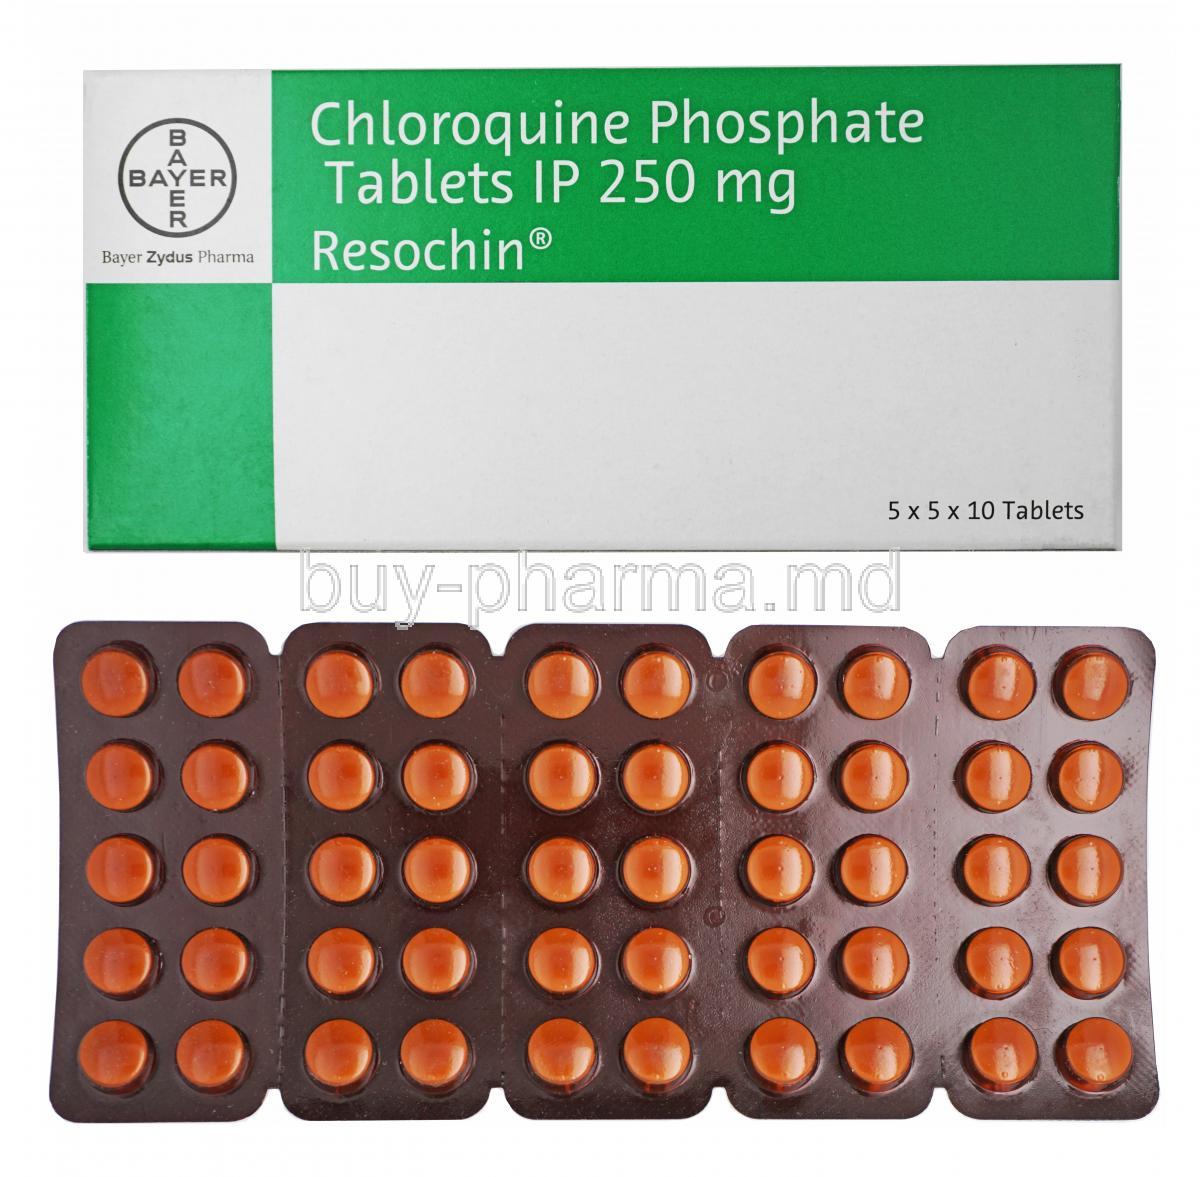 Resochin Chloroquine 250mg box and tablet